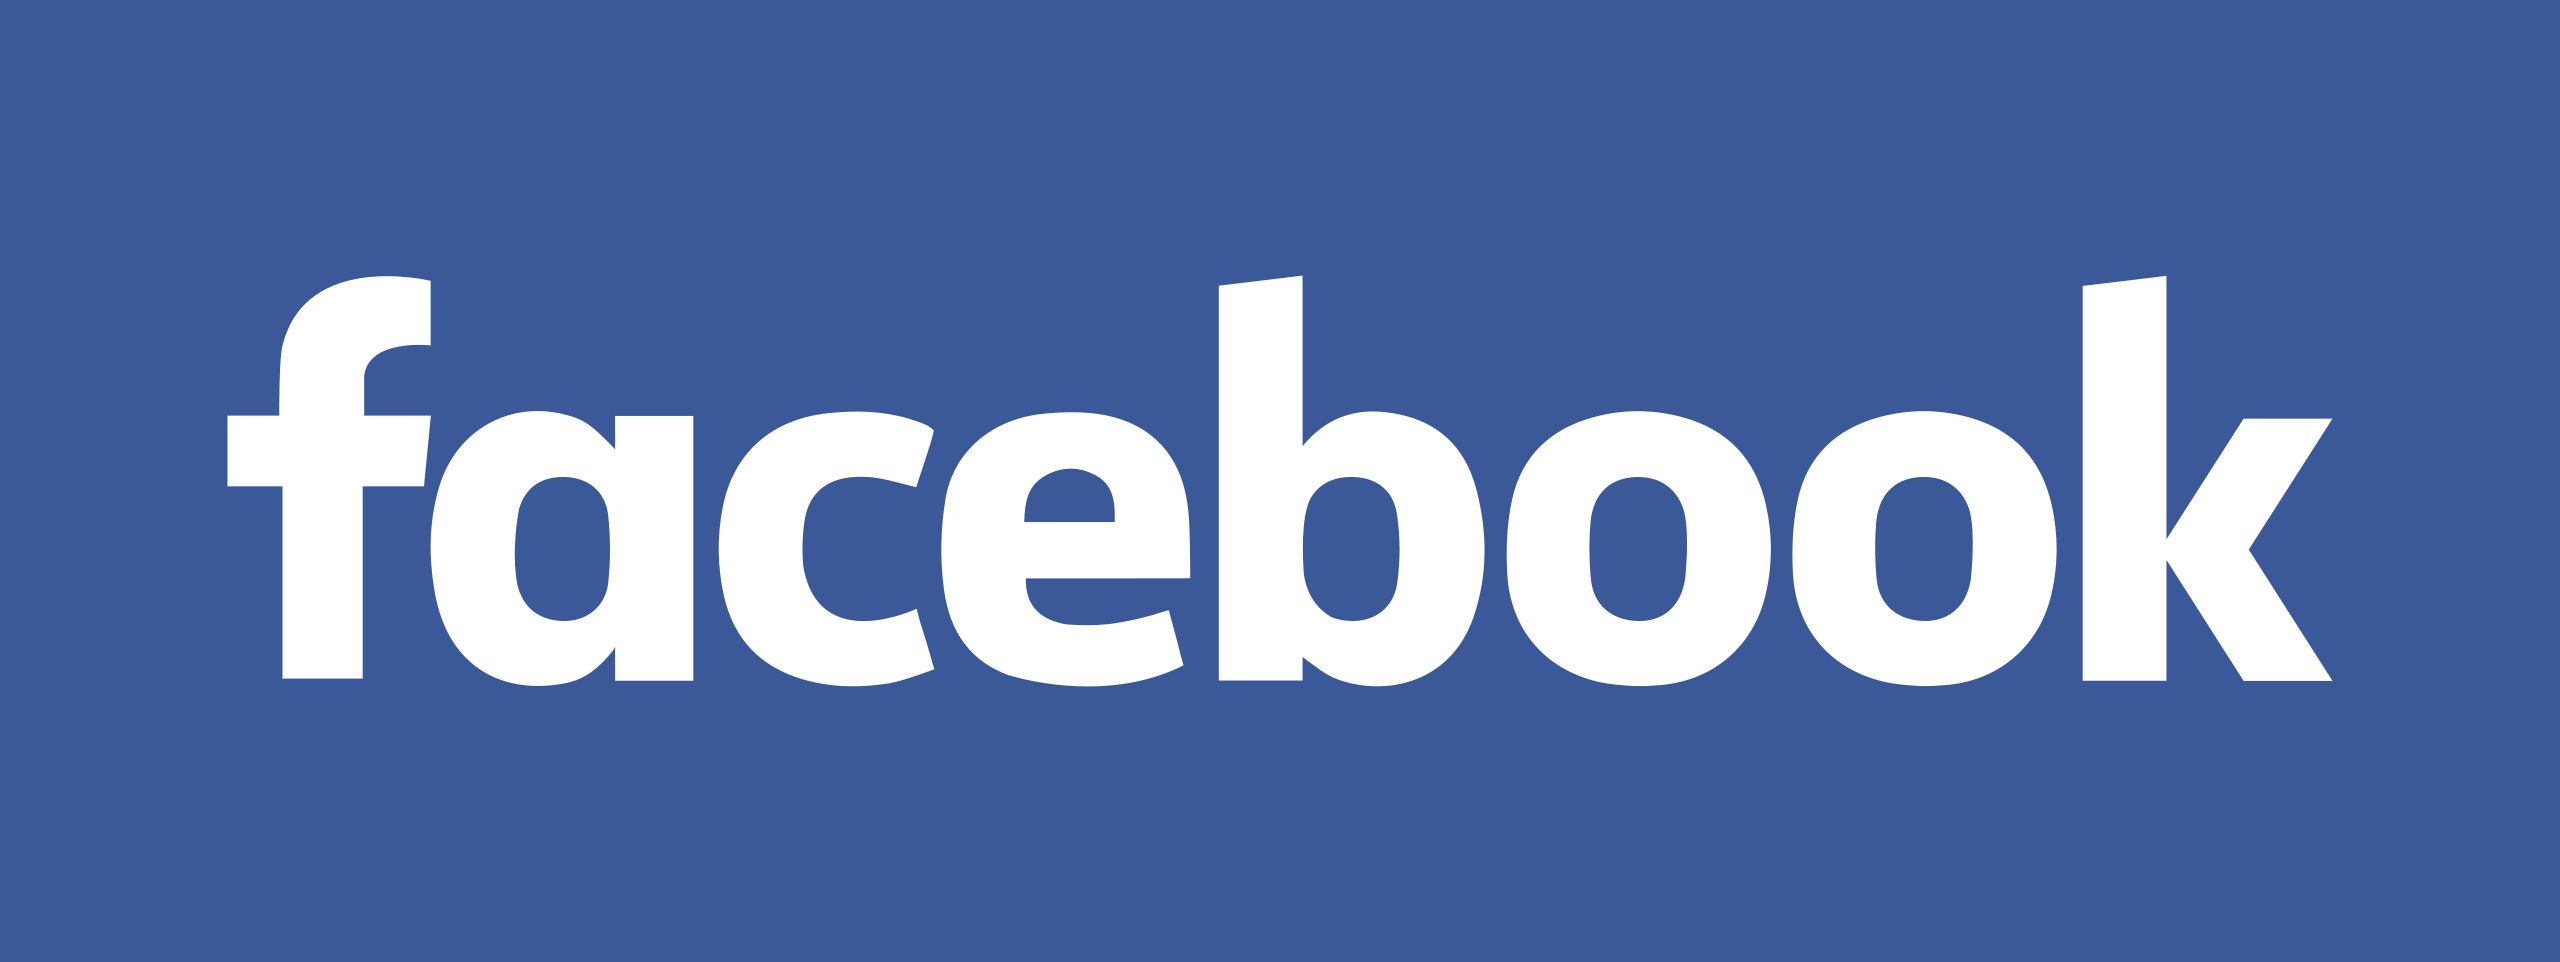 File:Facebook New Logo (2015).svg - Wikipedia